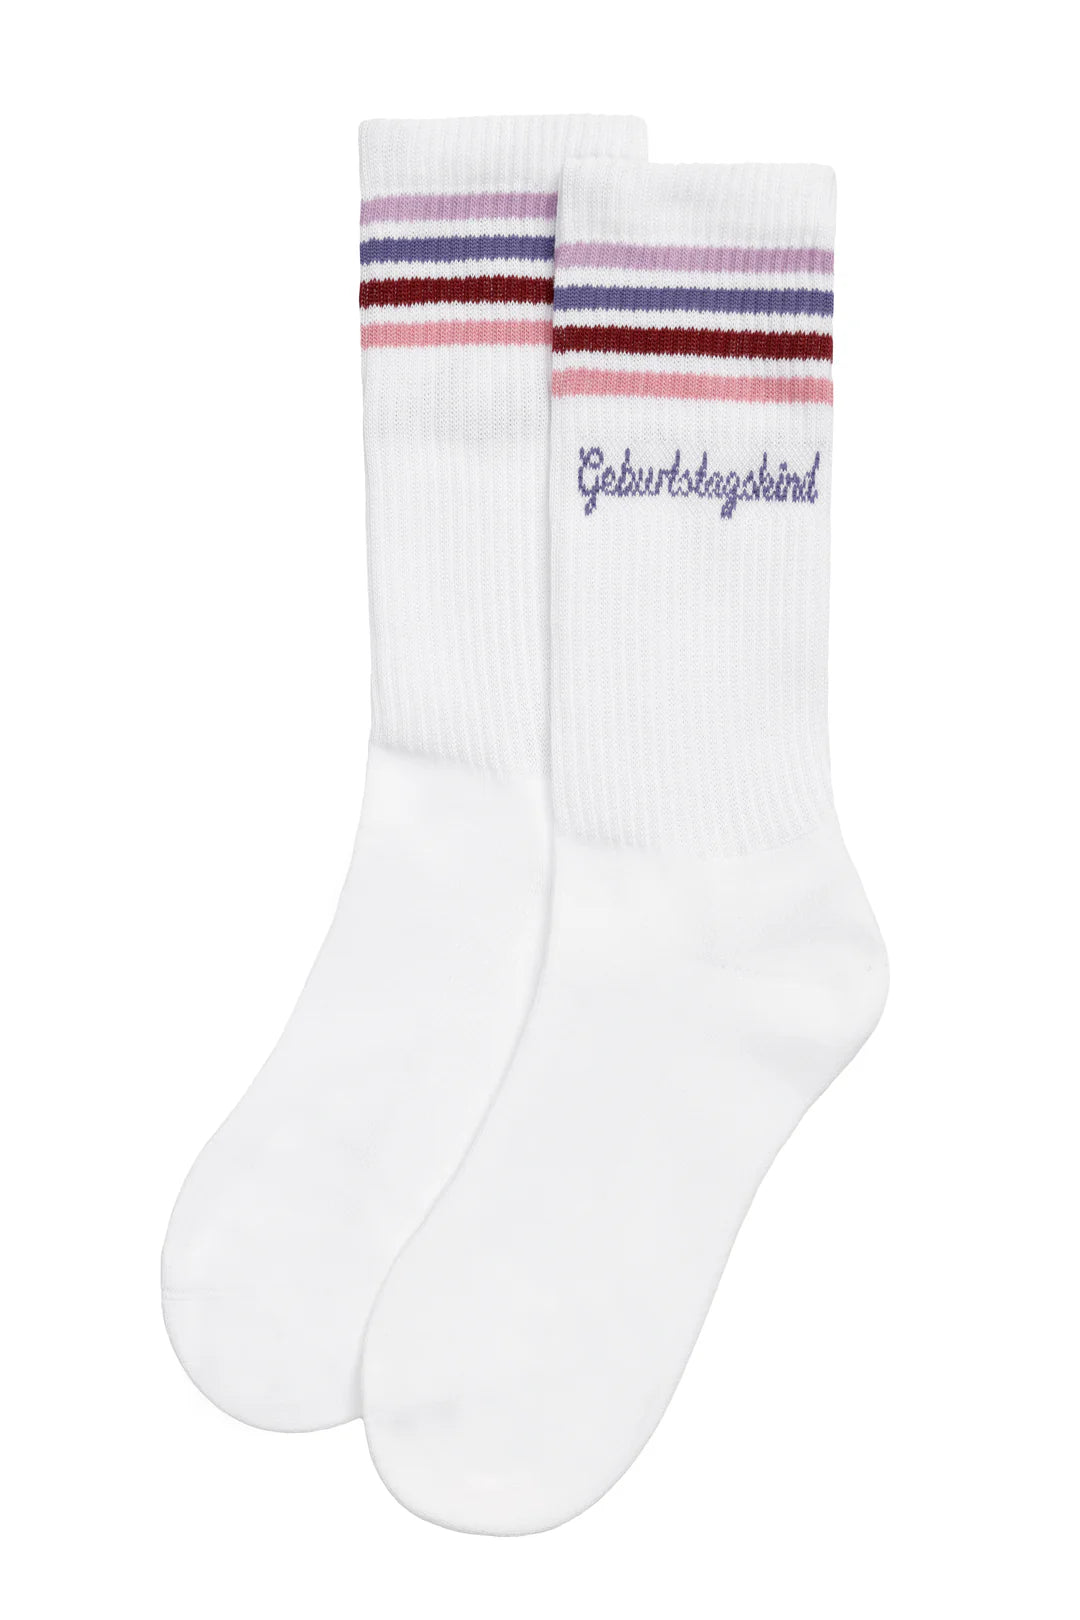 Geburtstagskind – Socken ADULTS